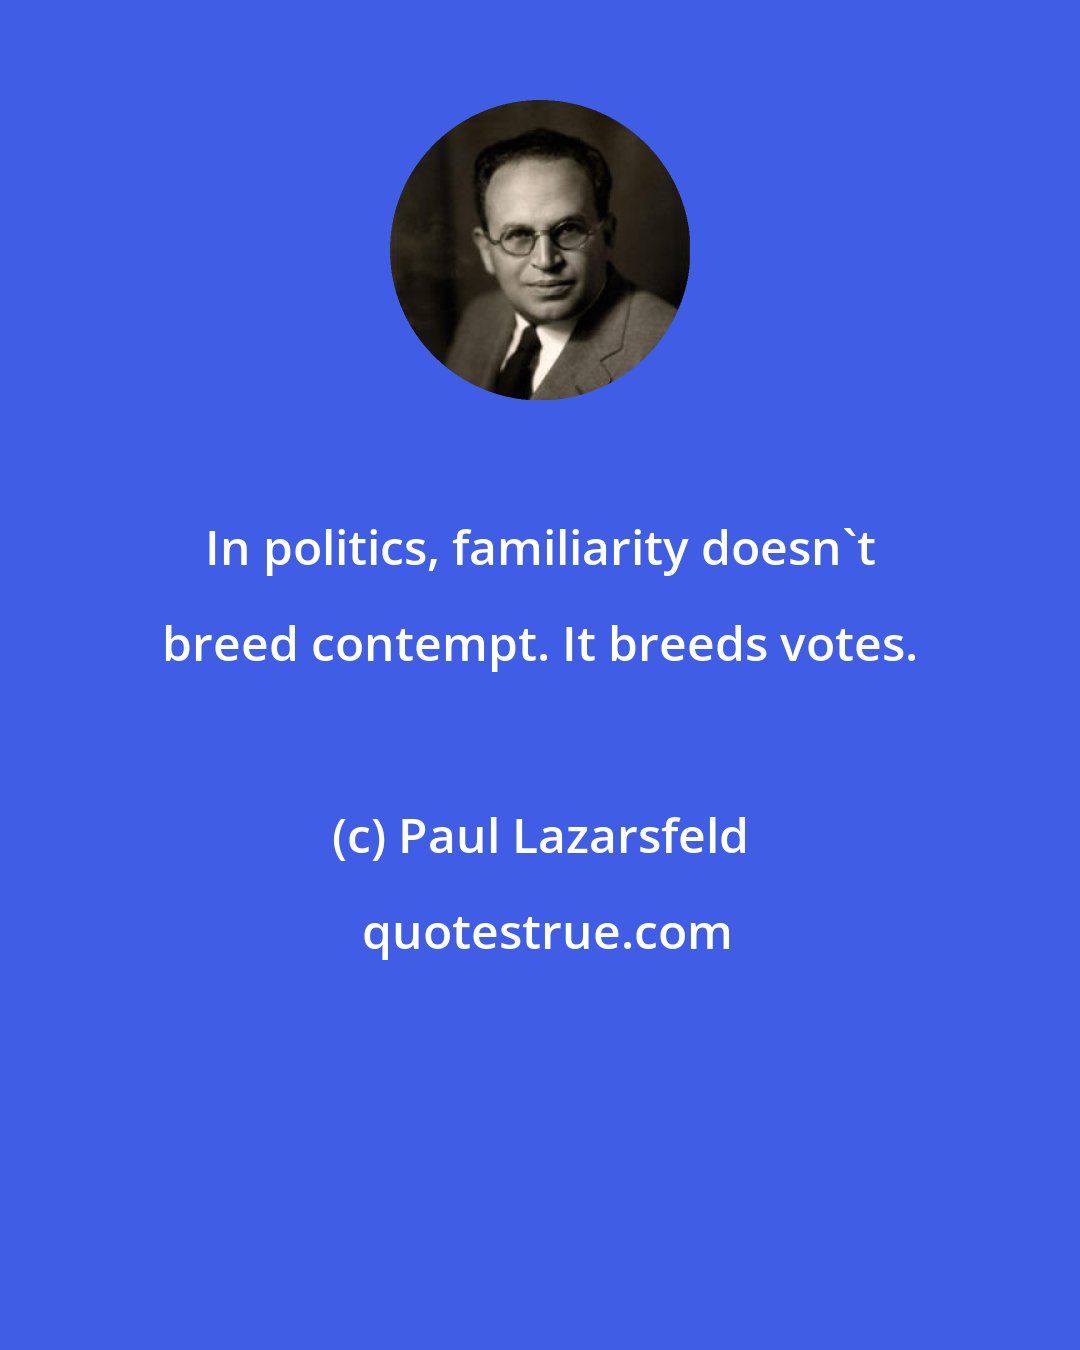 Paul Lazarsfeld: In politics, familiarity doesn't breed contempt. It breeds votes.